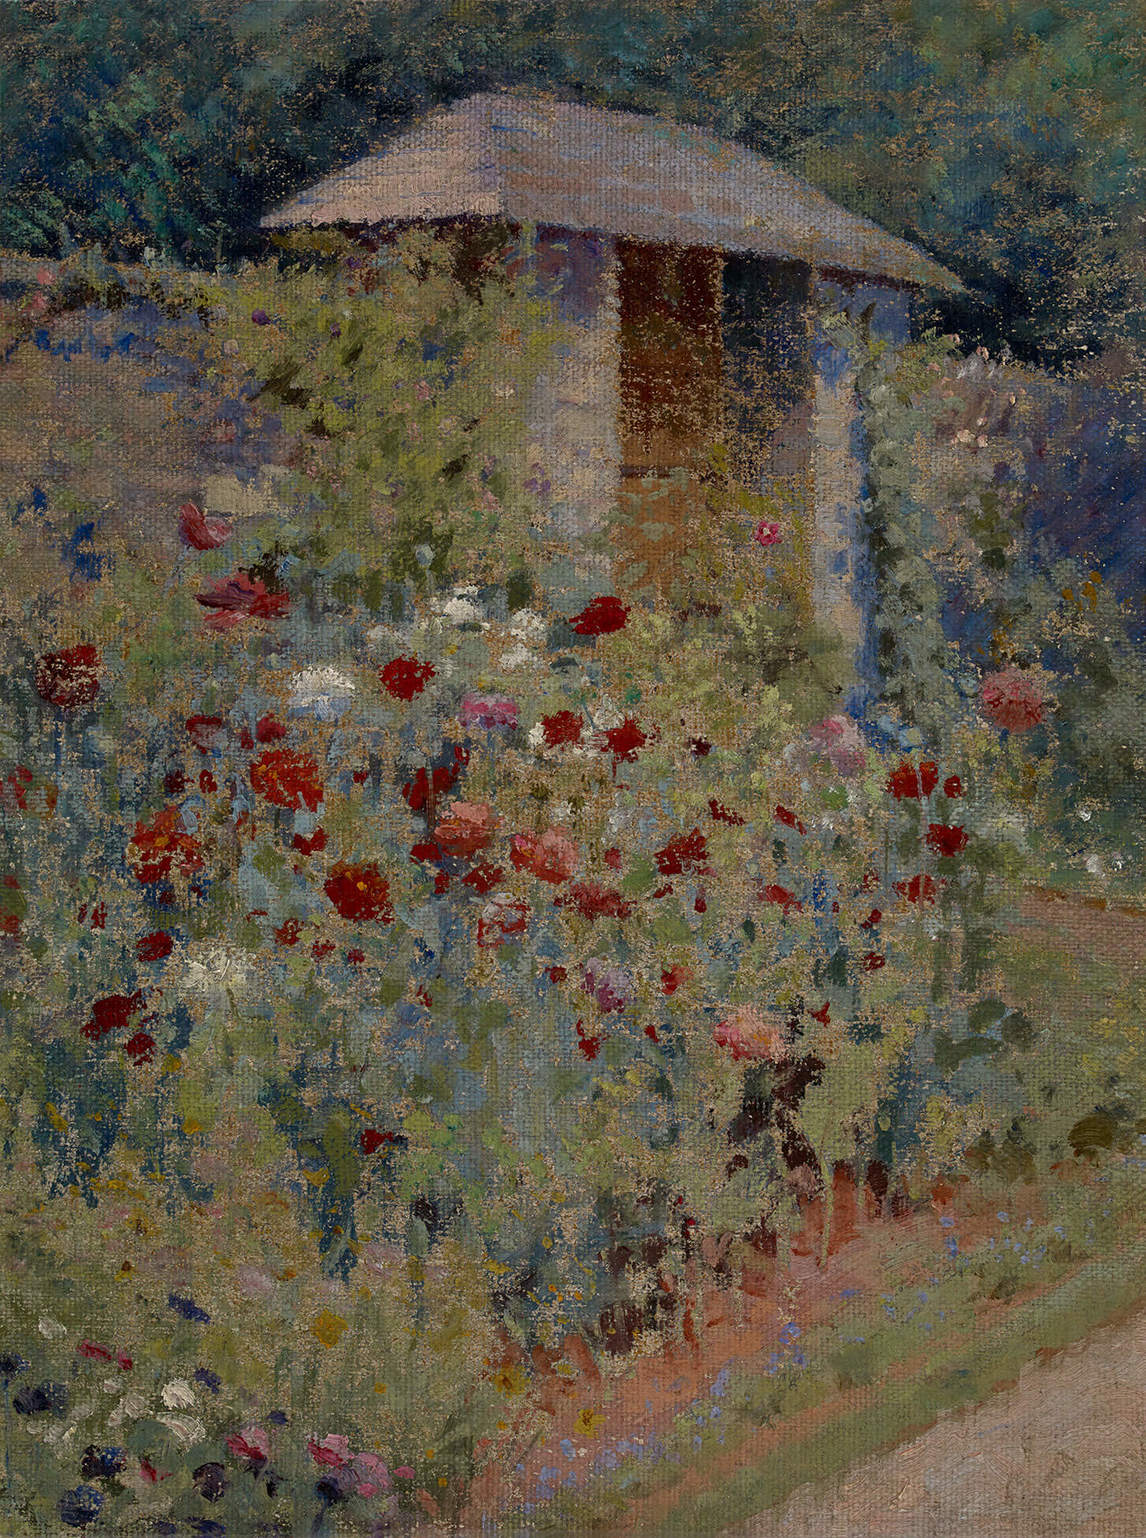 Mary Hiester Reid, A Poppy Garden (Un jardin de coquelicots), s.d.